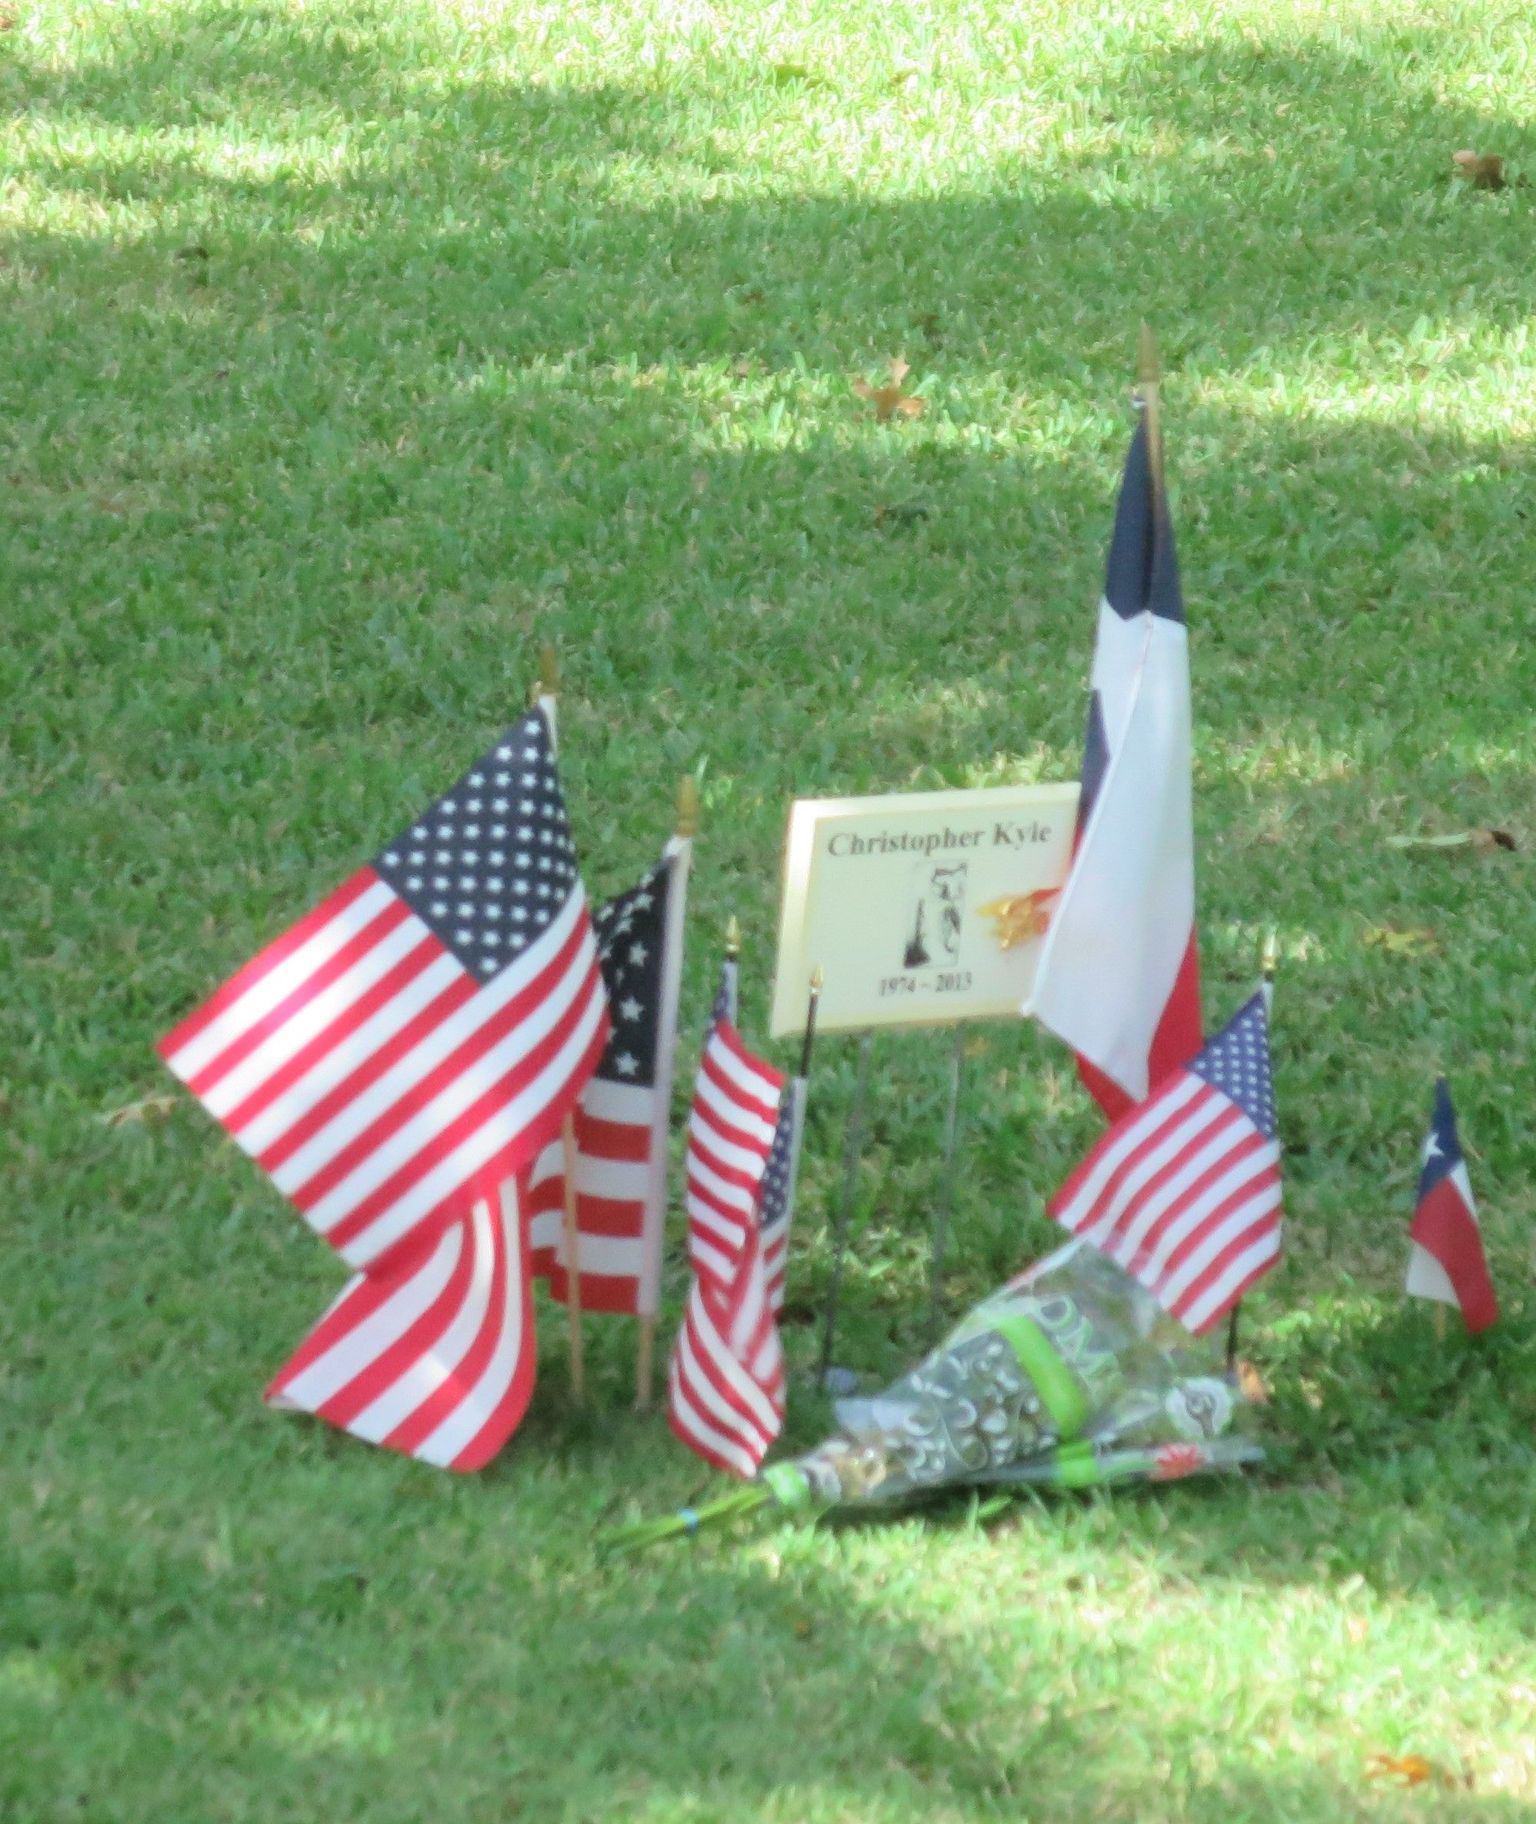 Gravesite of Christopher Kyle American Sniper